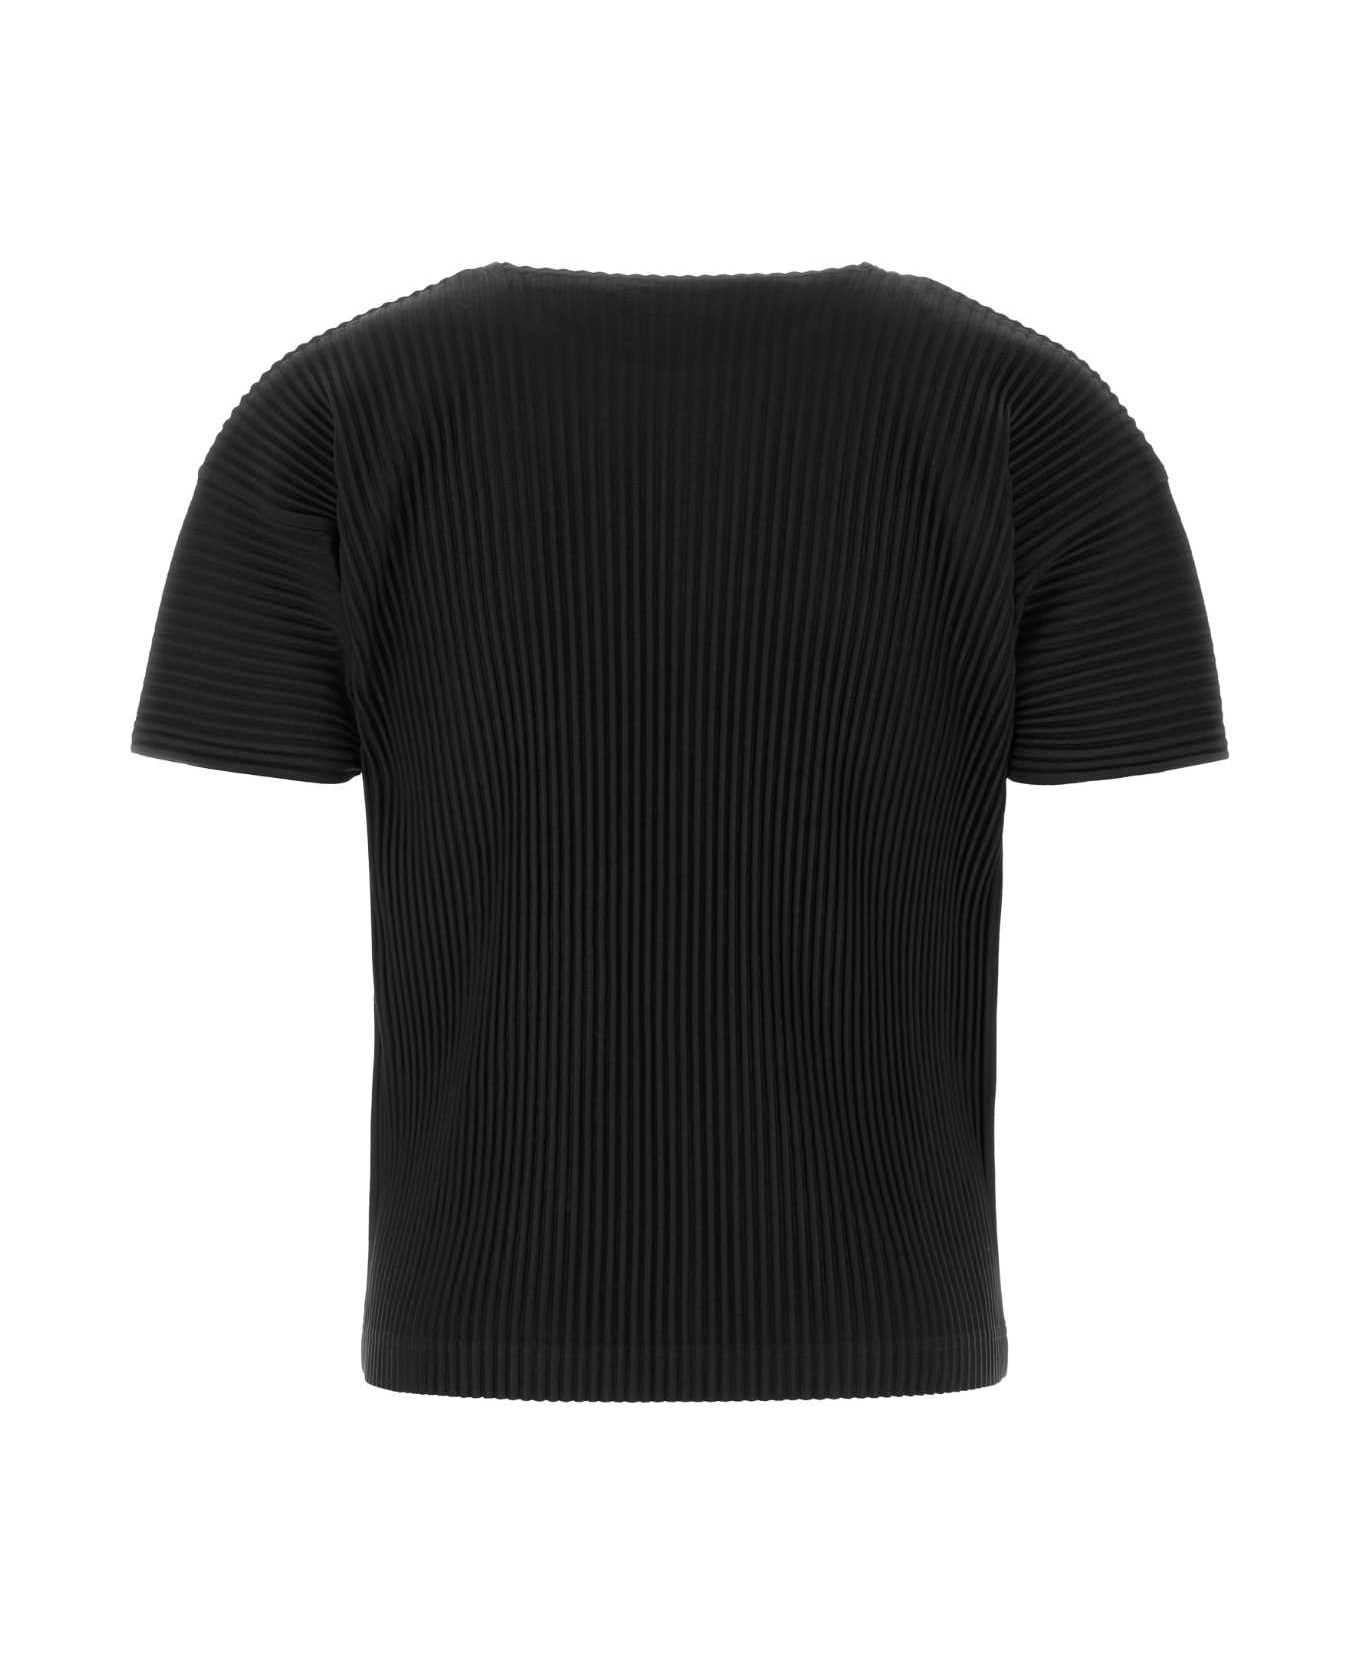 Homme Plissé Issey Miyake Black Polyester T-shirt - BLACK